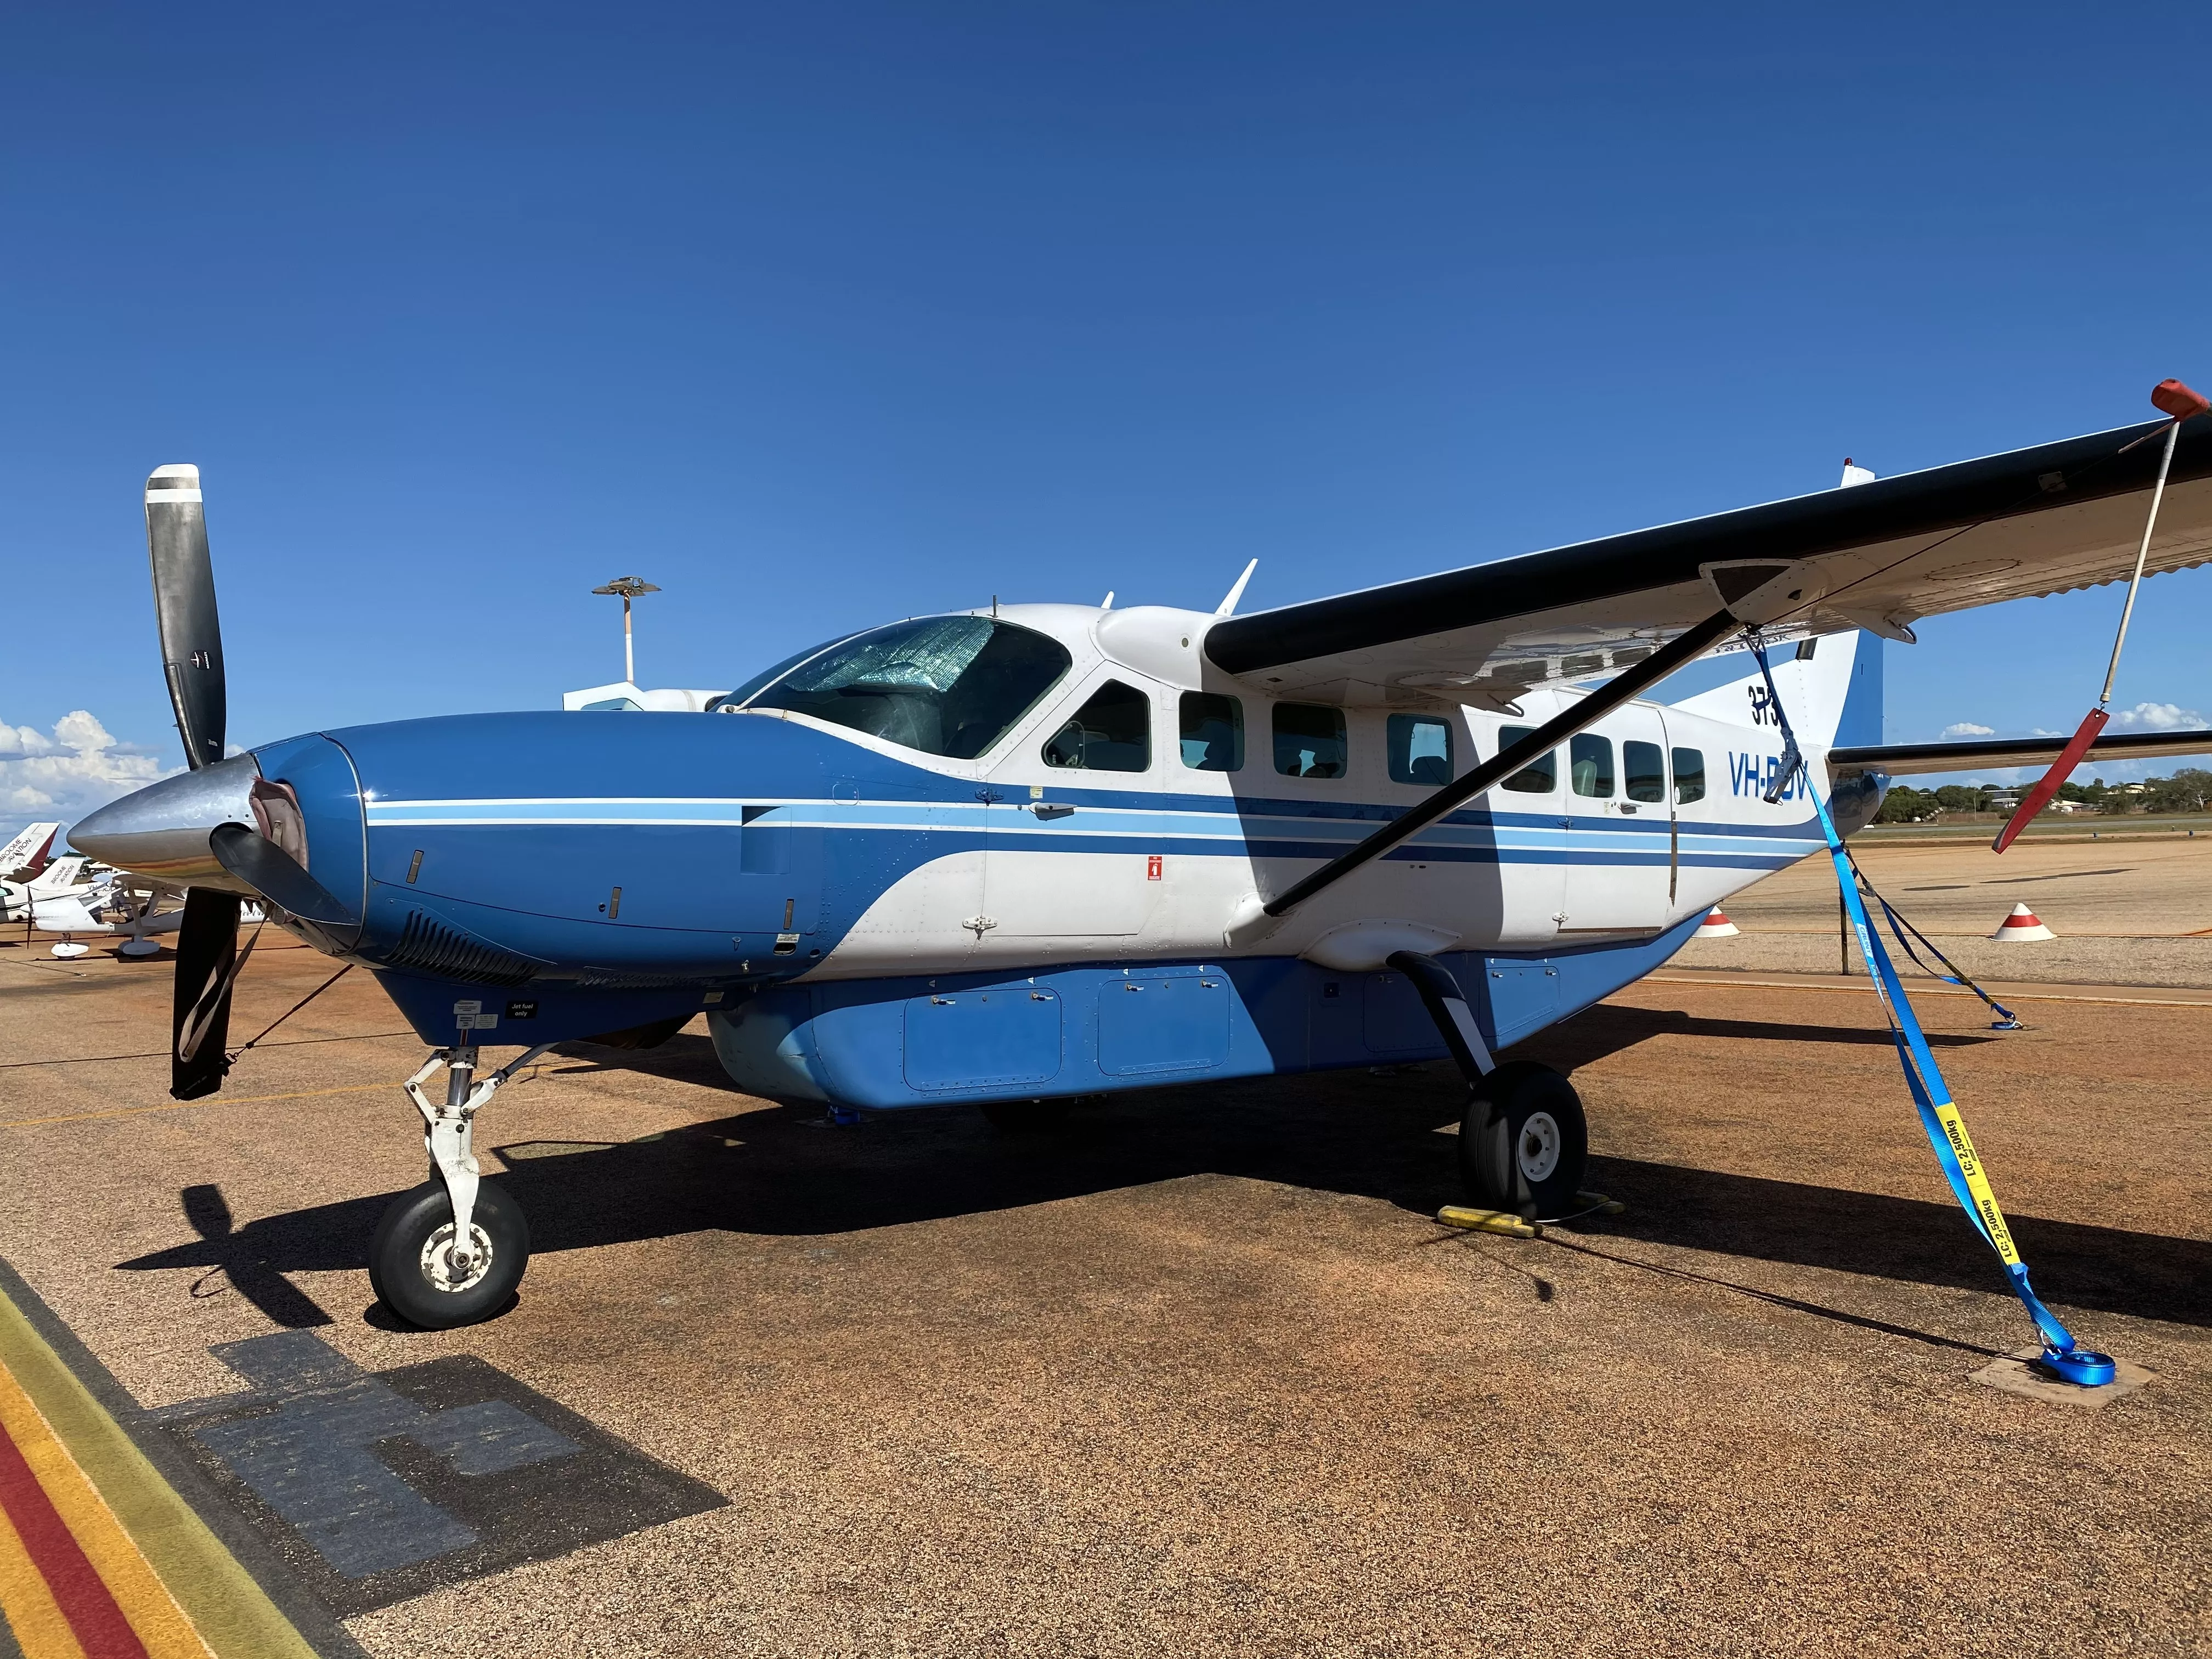 Broome Aviation in Australia, Australia and Oceania | Scenic Flights - Rated 1.3